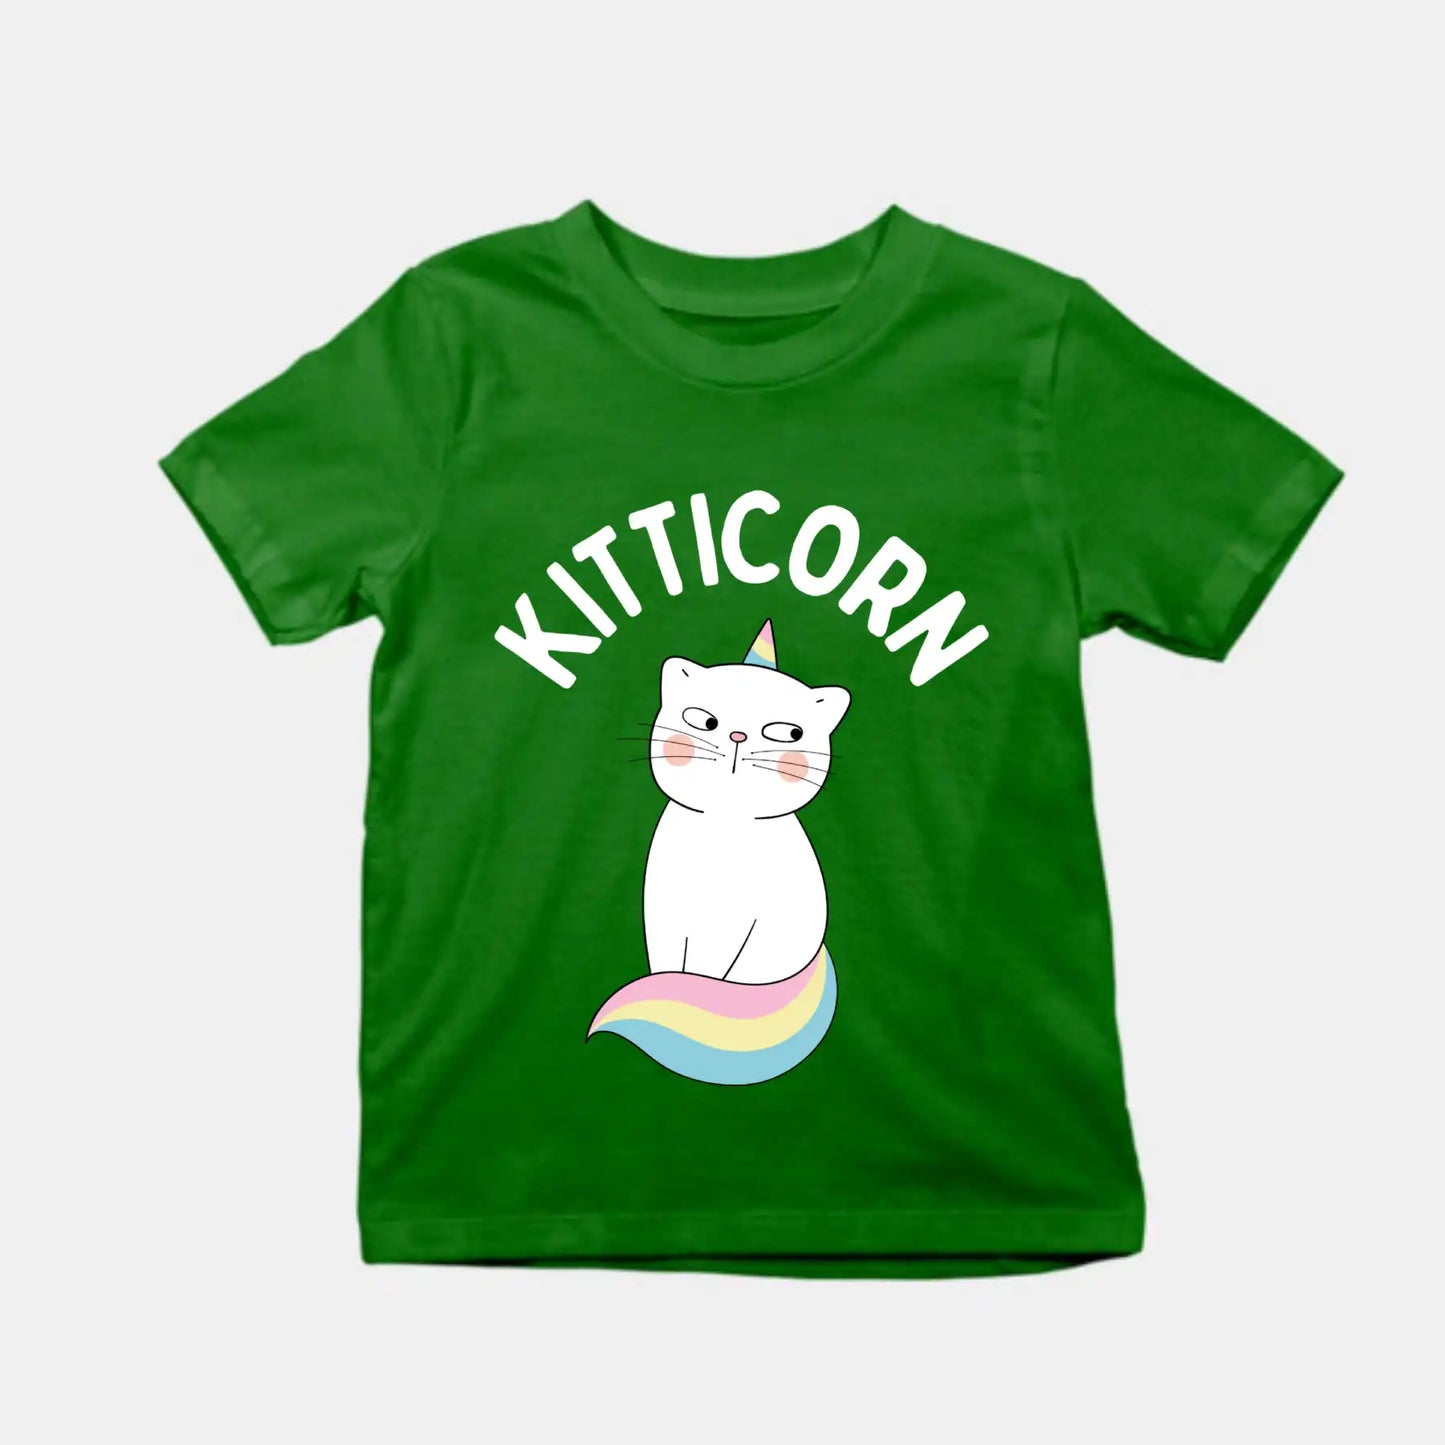 Kitticorn Kids T-Shirt Bottle Green IZZIT APPAREL